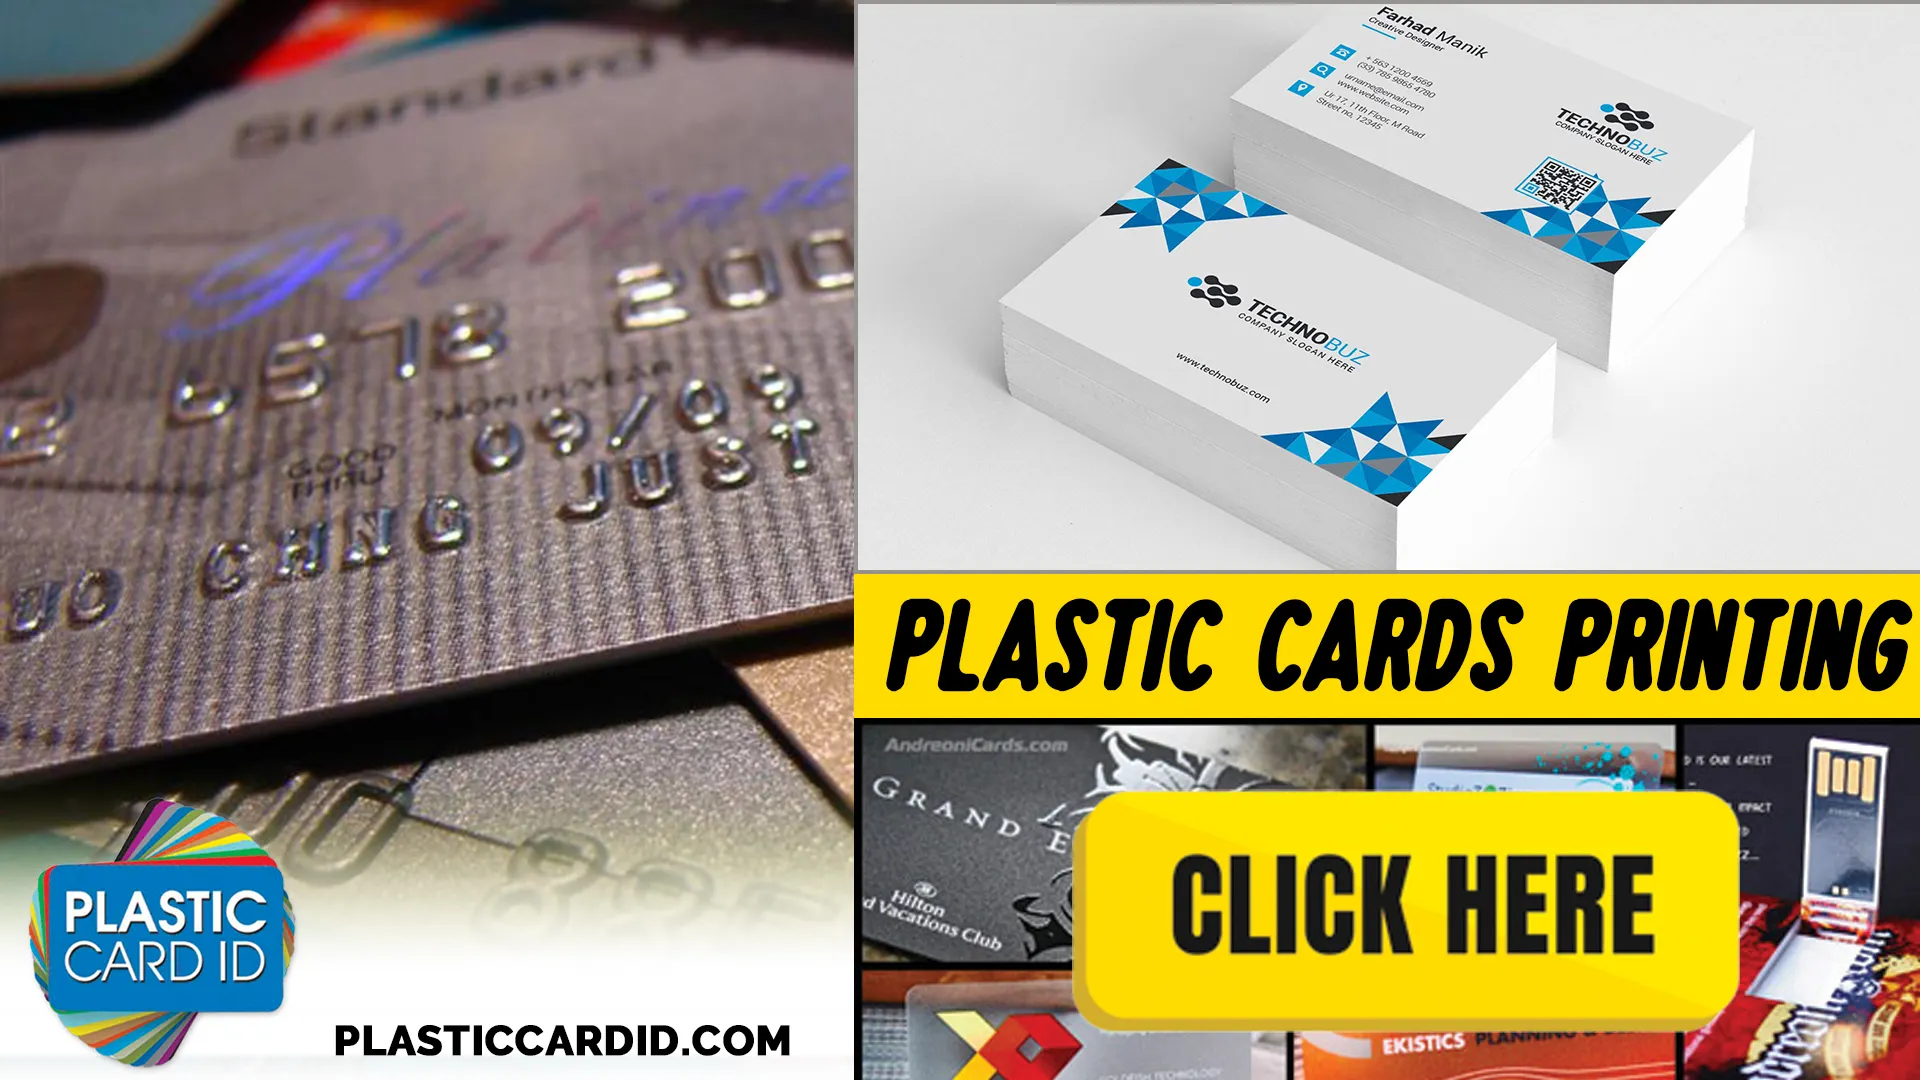 Optimizing Plastic Card Lifespan through Organization